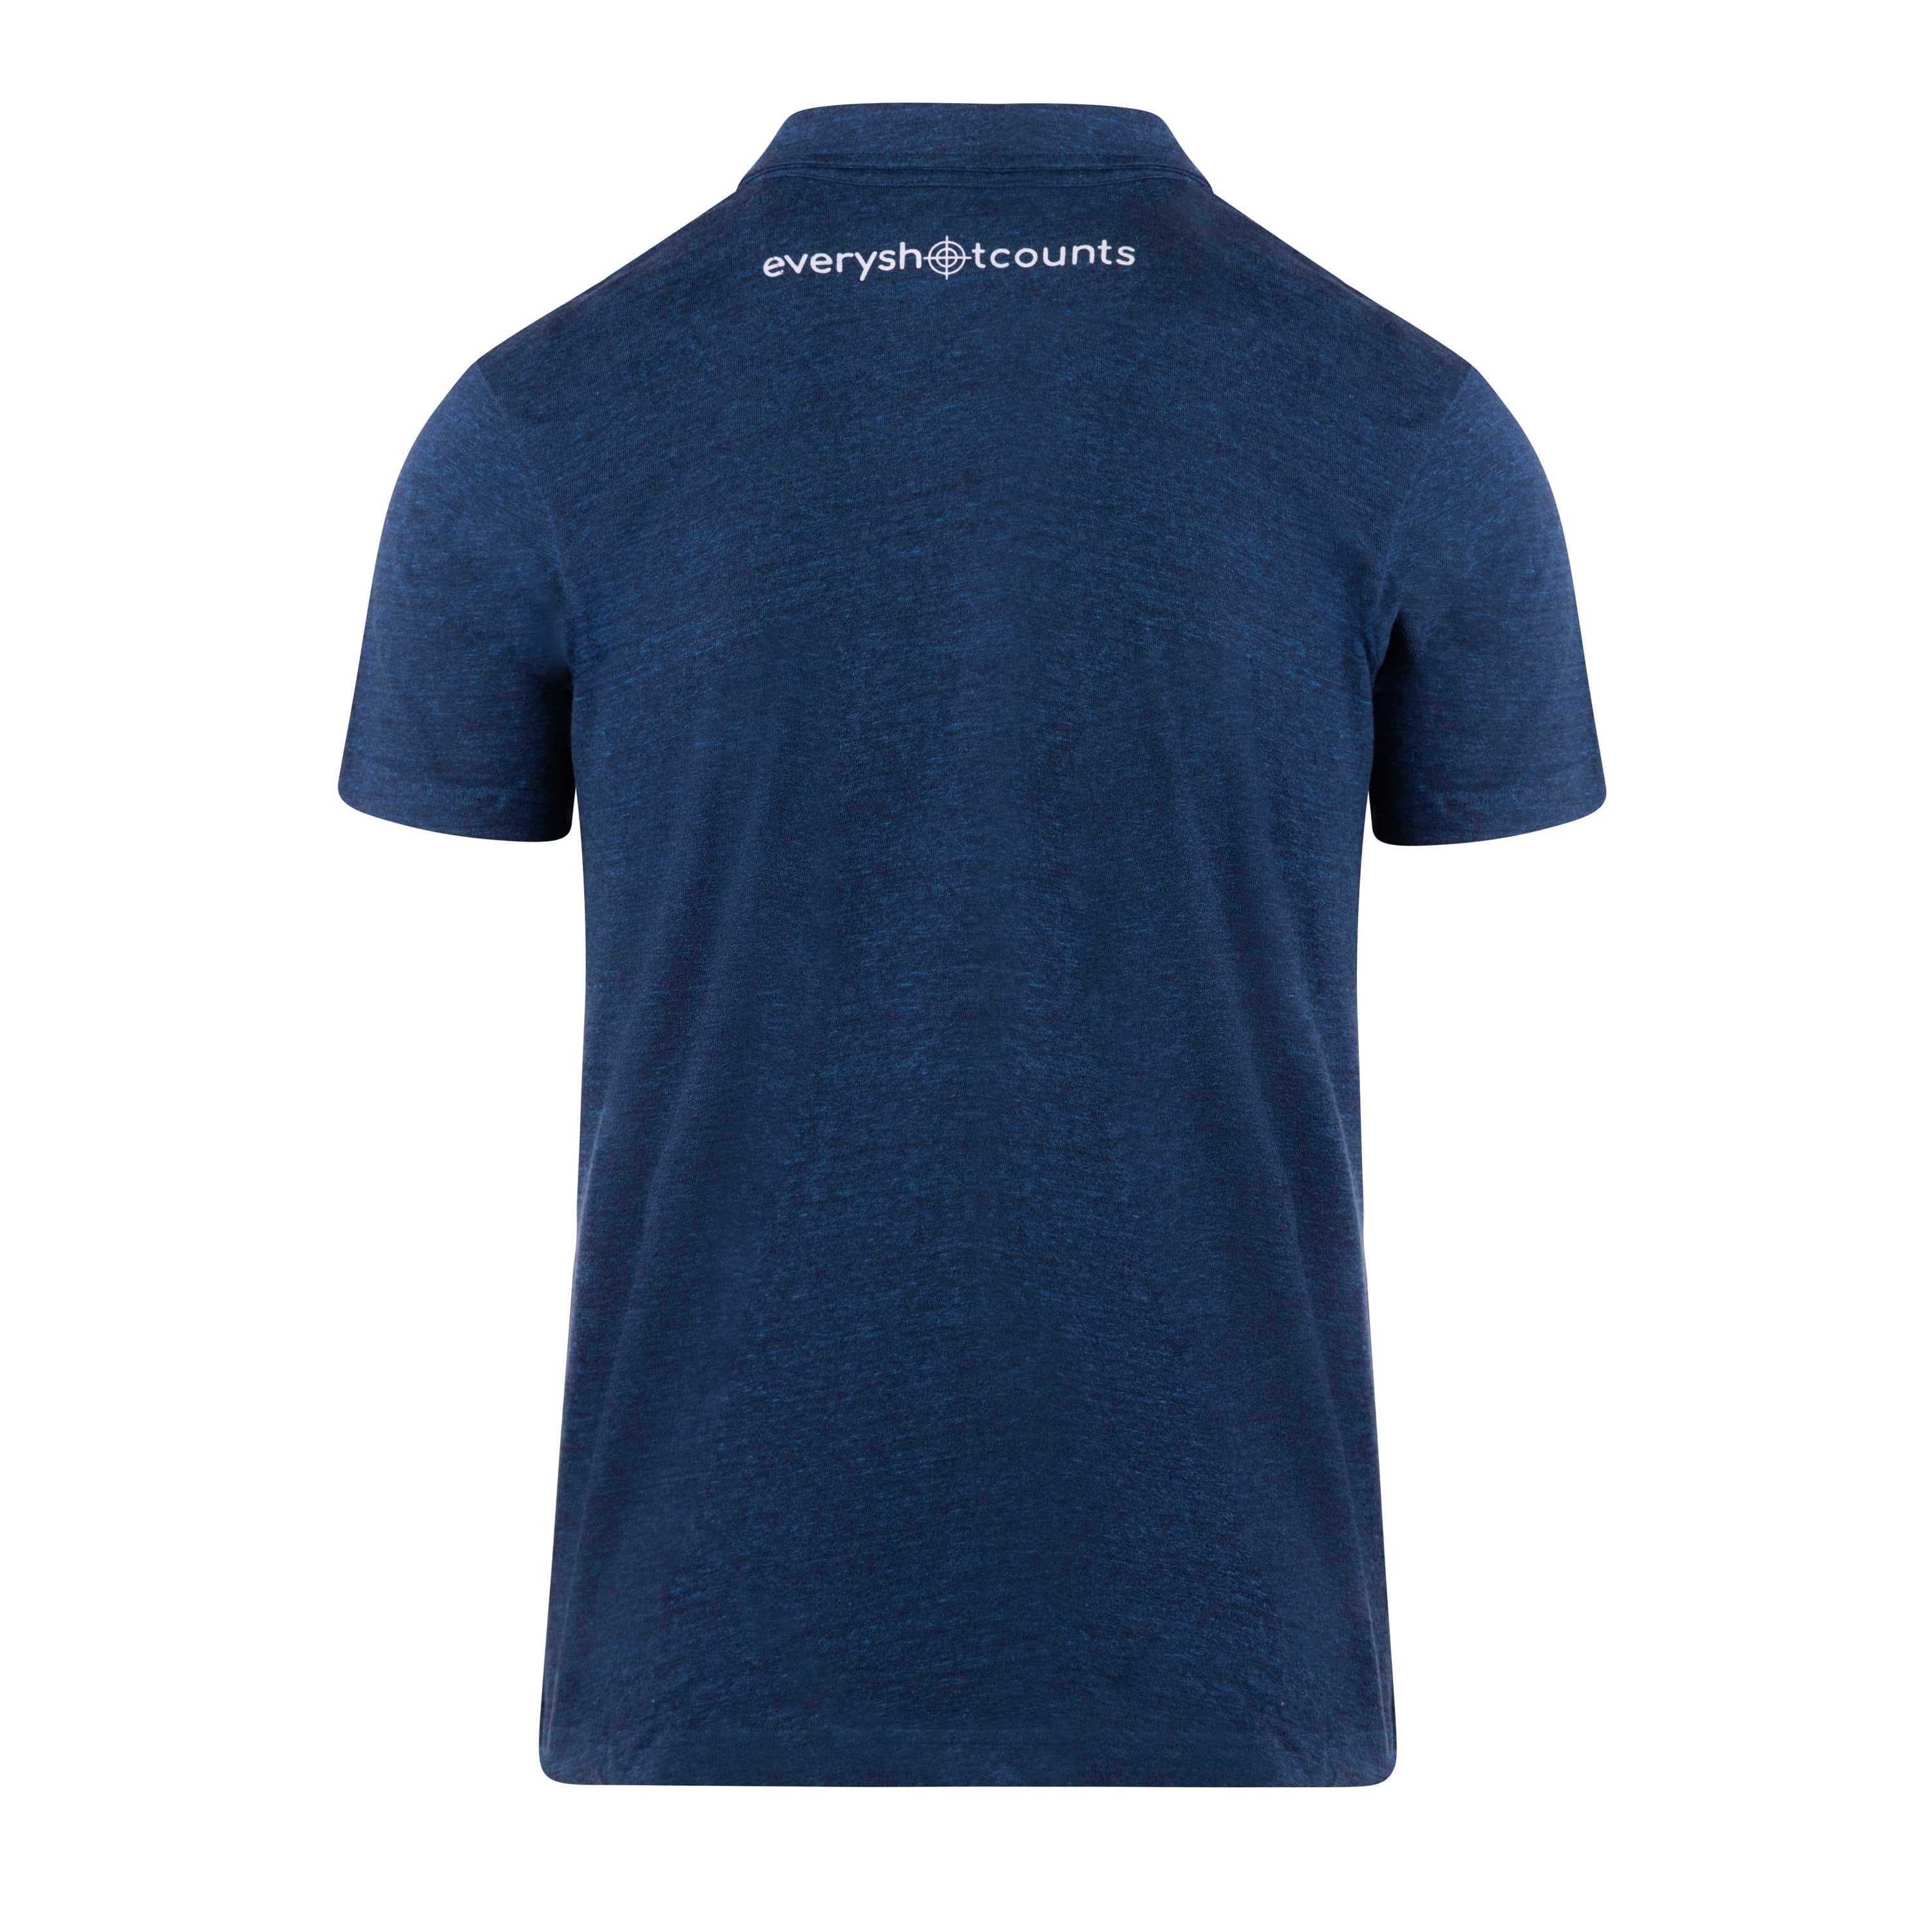 Noren - Blue Golf Polo Shirt